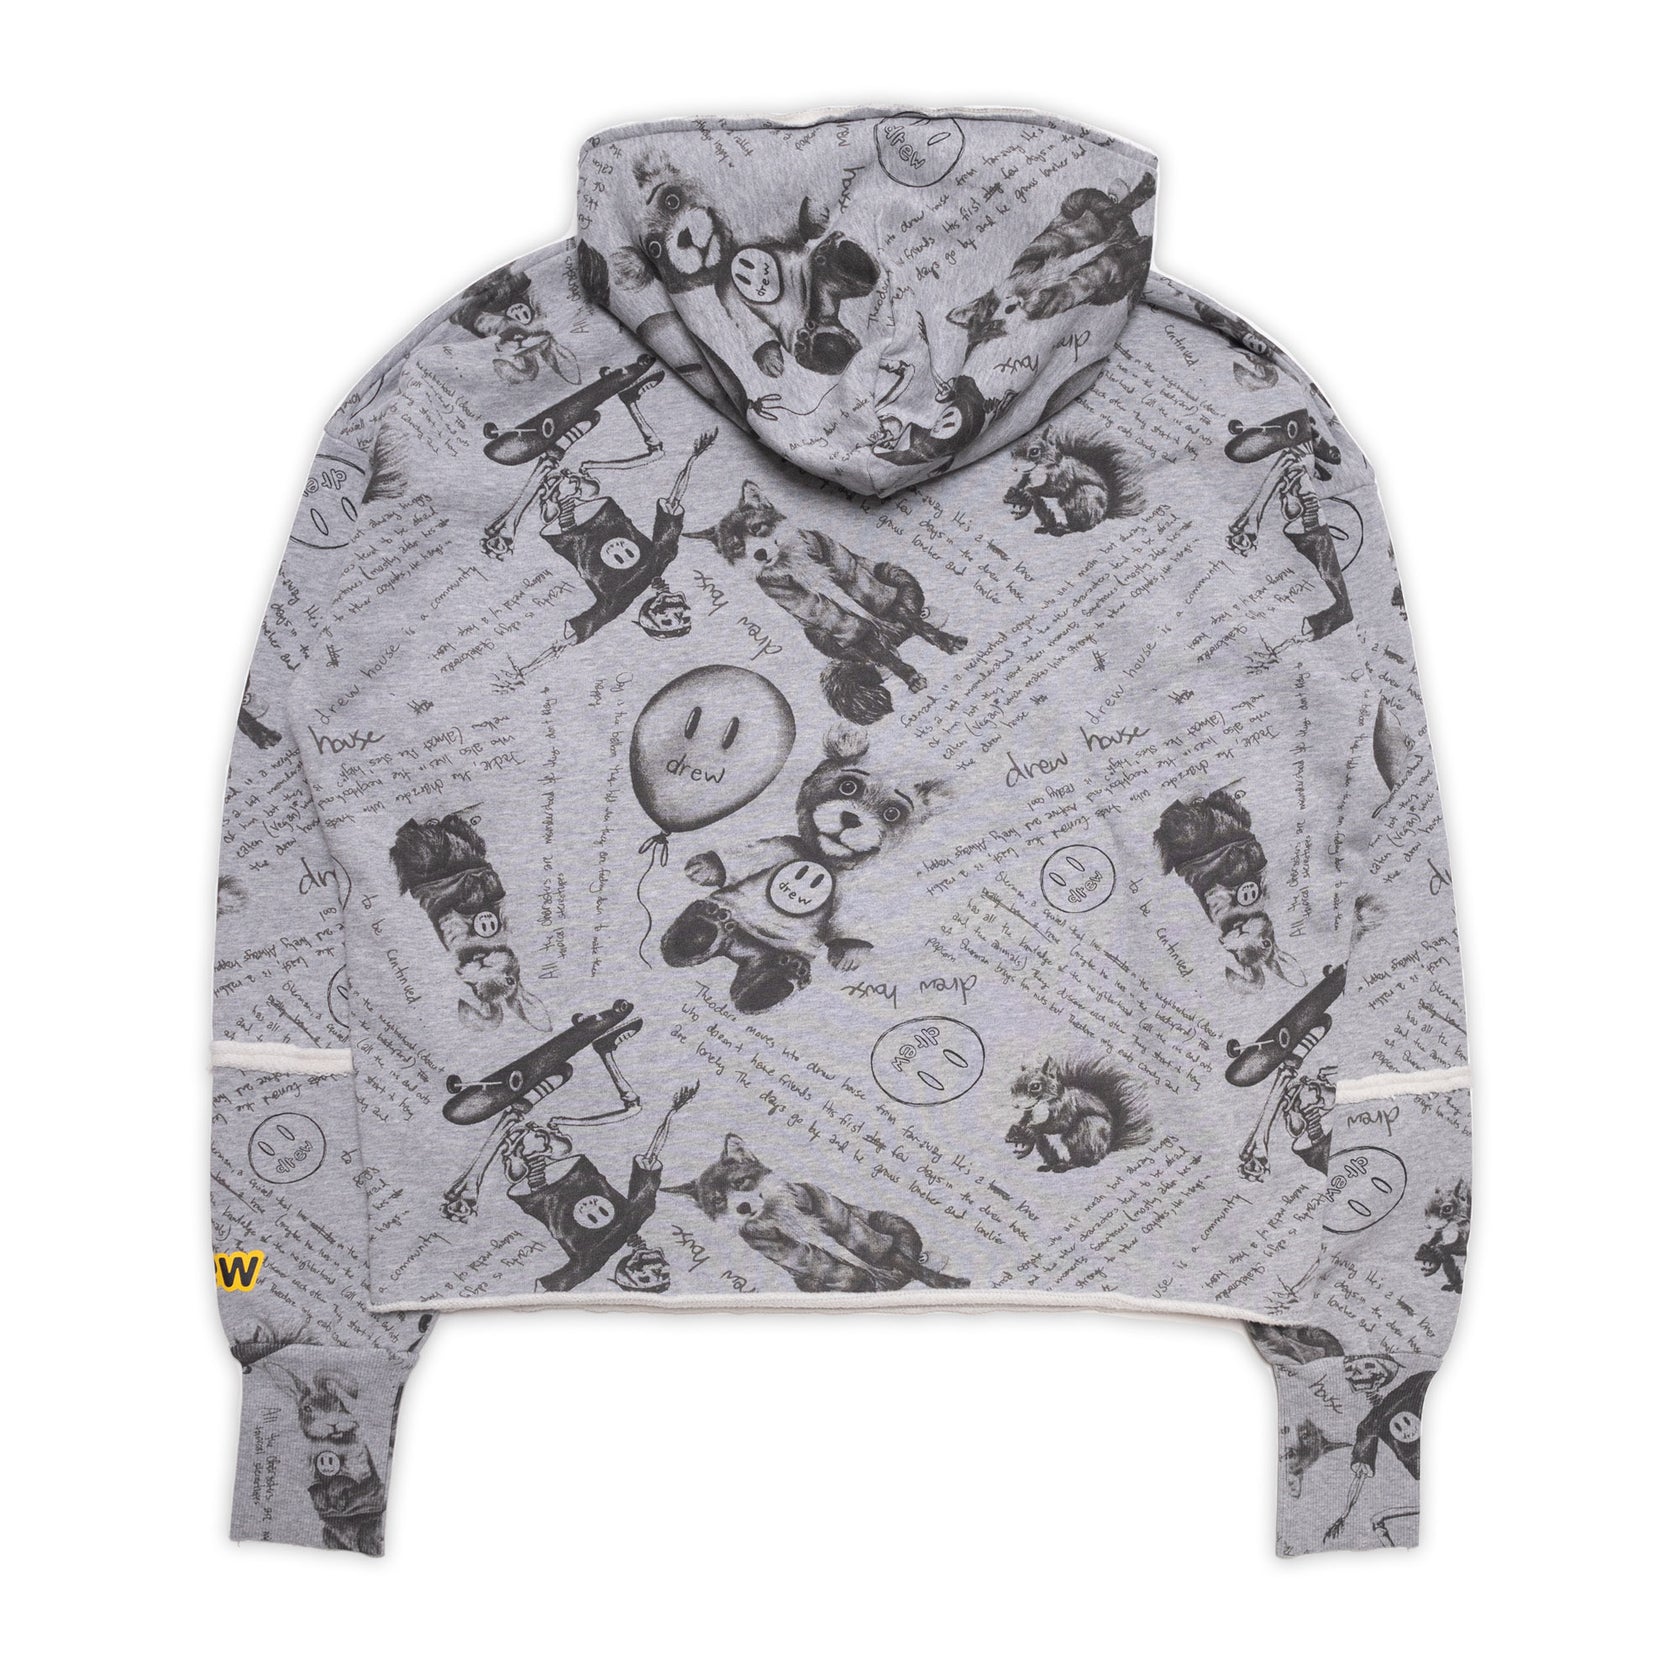 drew house secret deconstructed hoodie idears/heather grey メンズ - JP